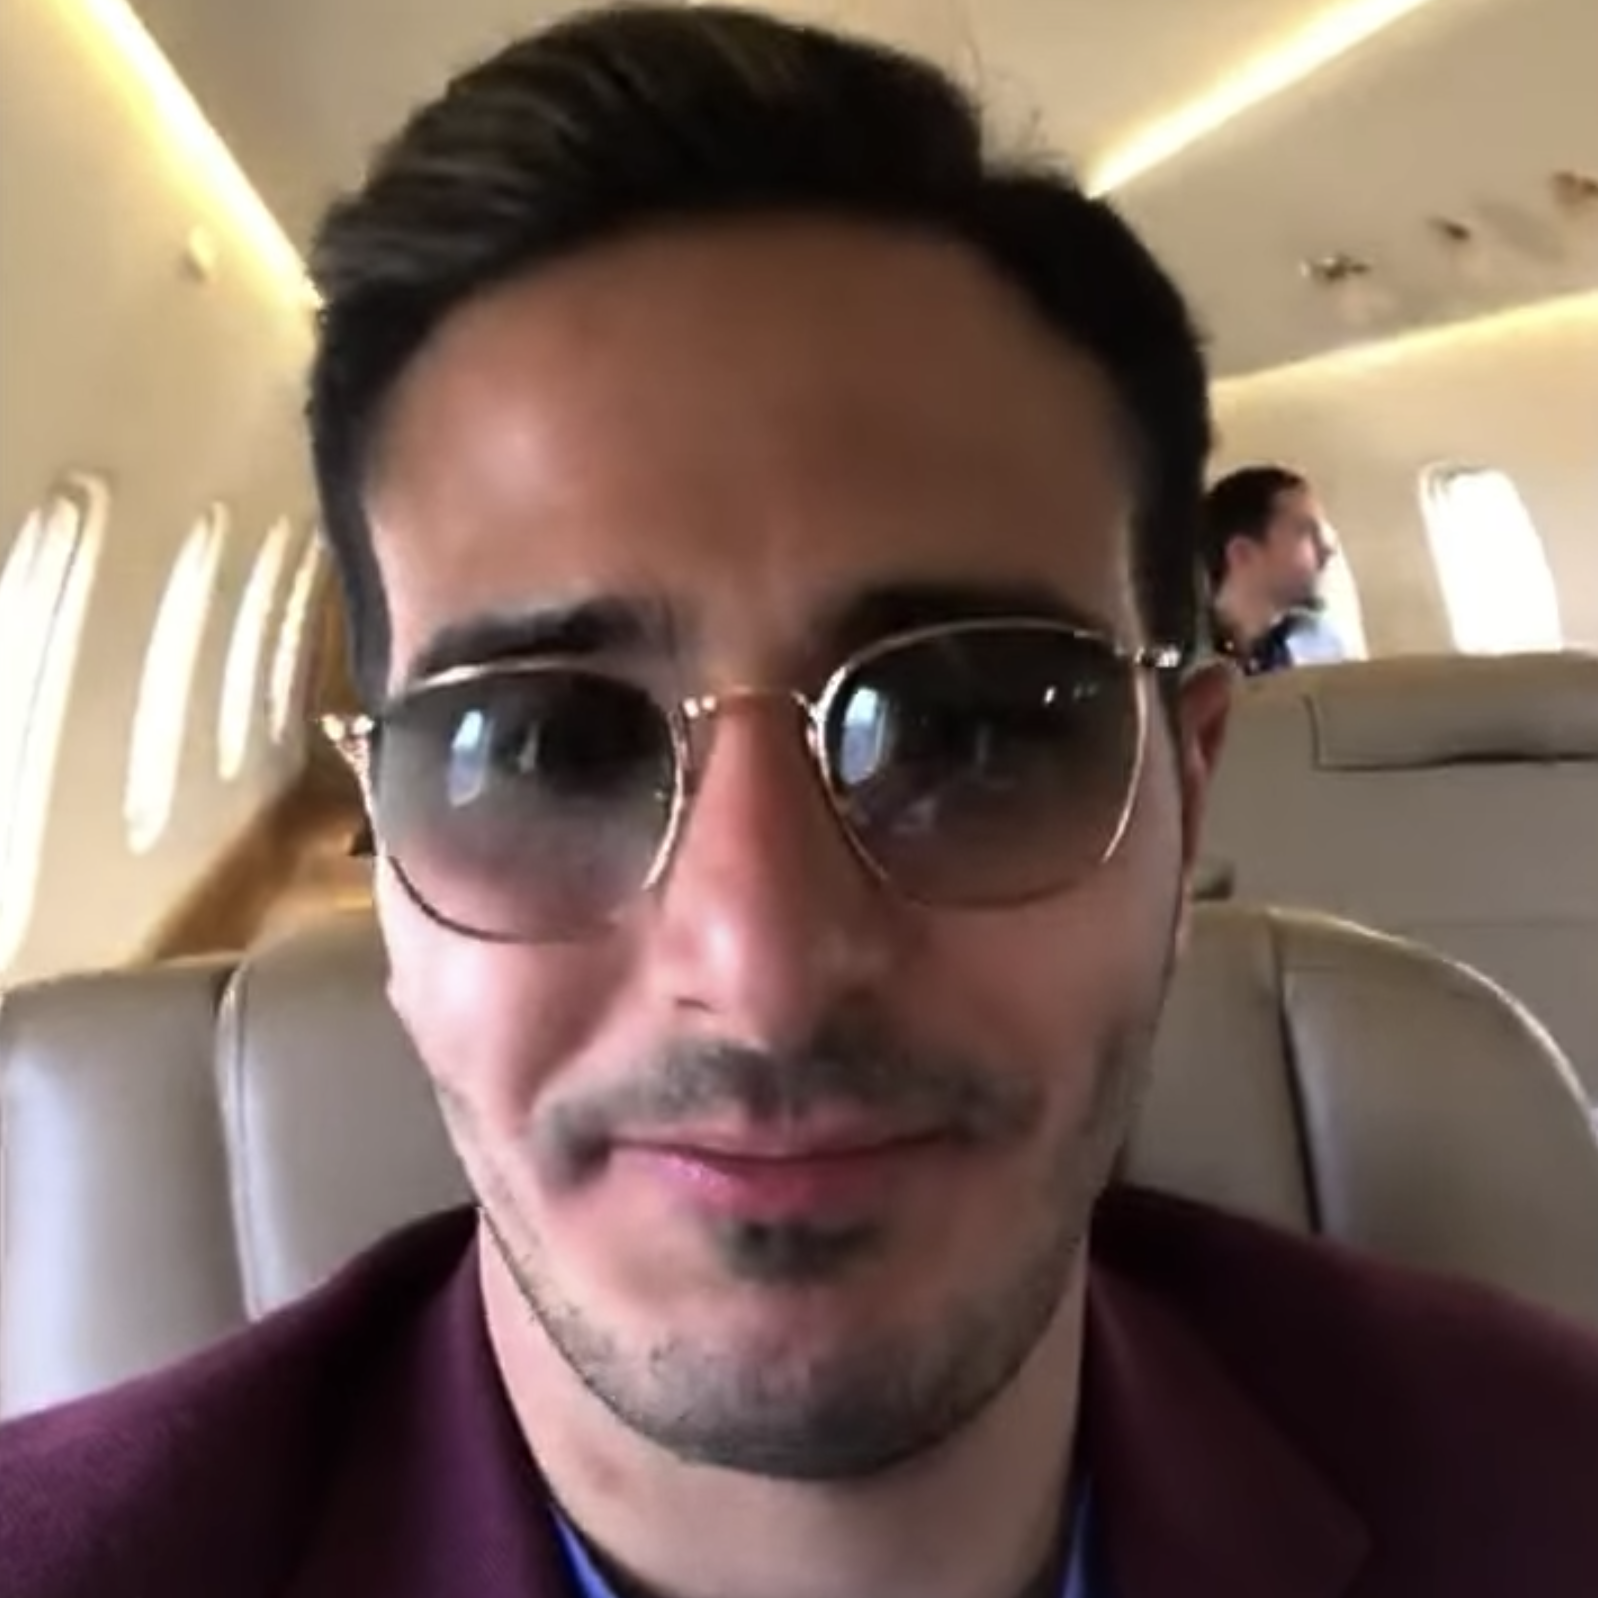 Simon taking a selfie on a private plane